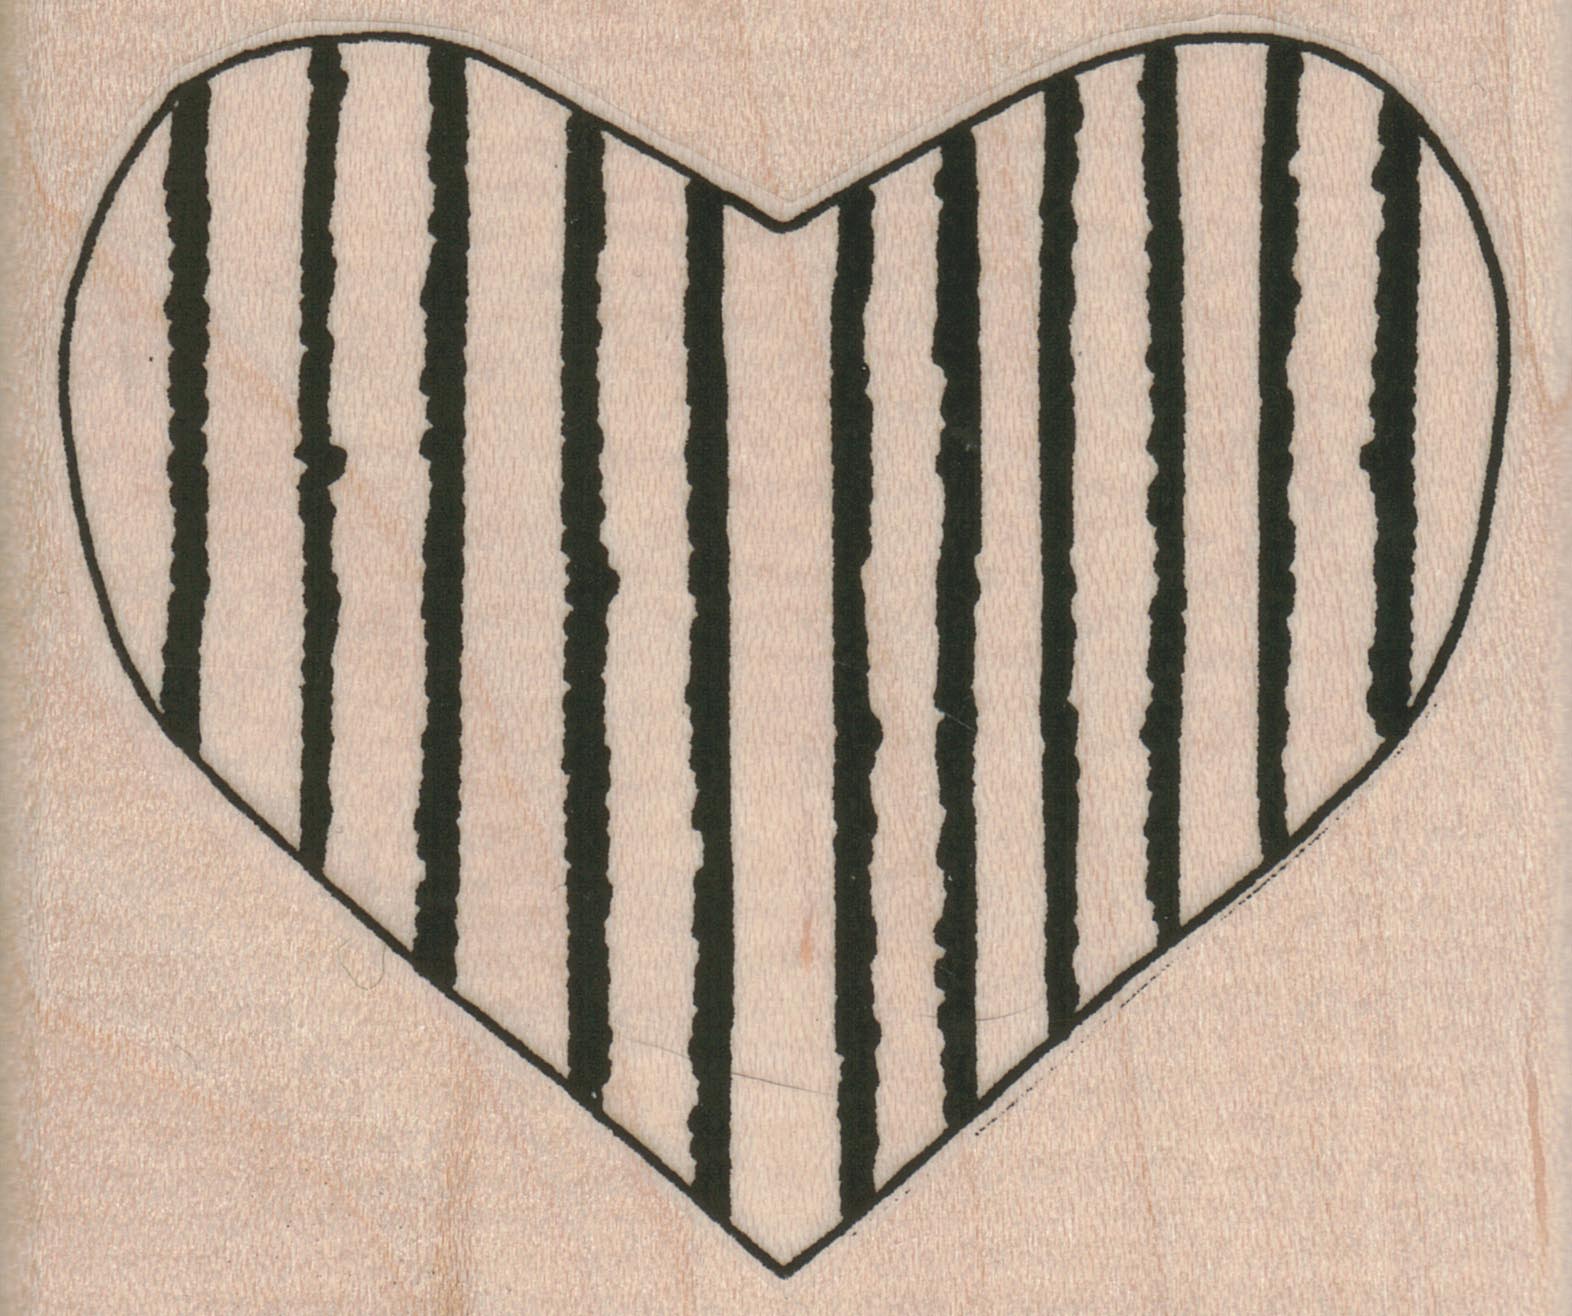 Striped Heart 2 3/4 x 2 1/4